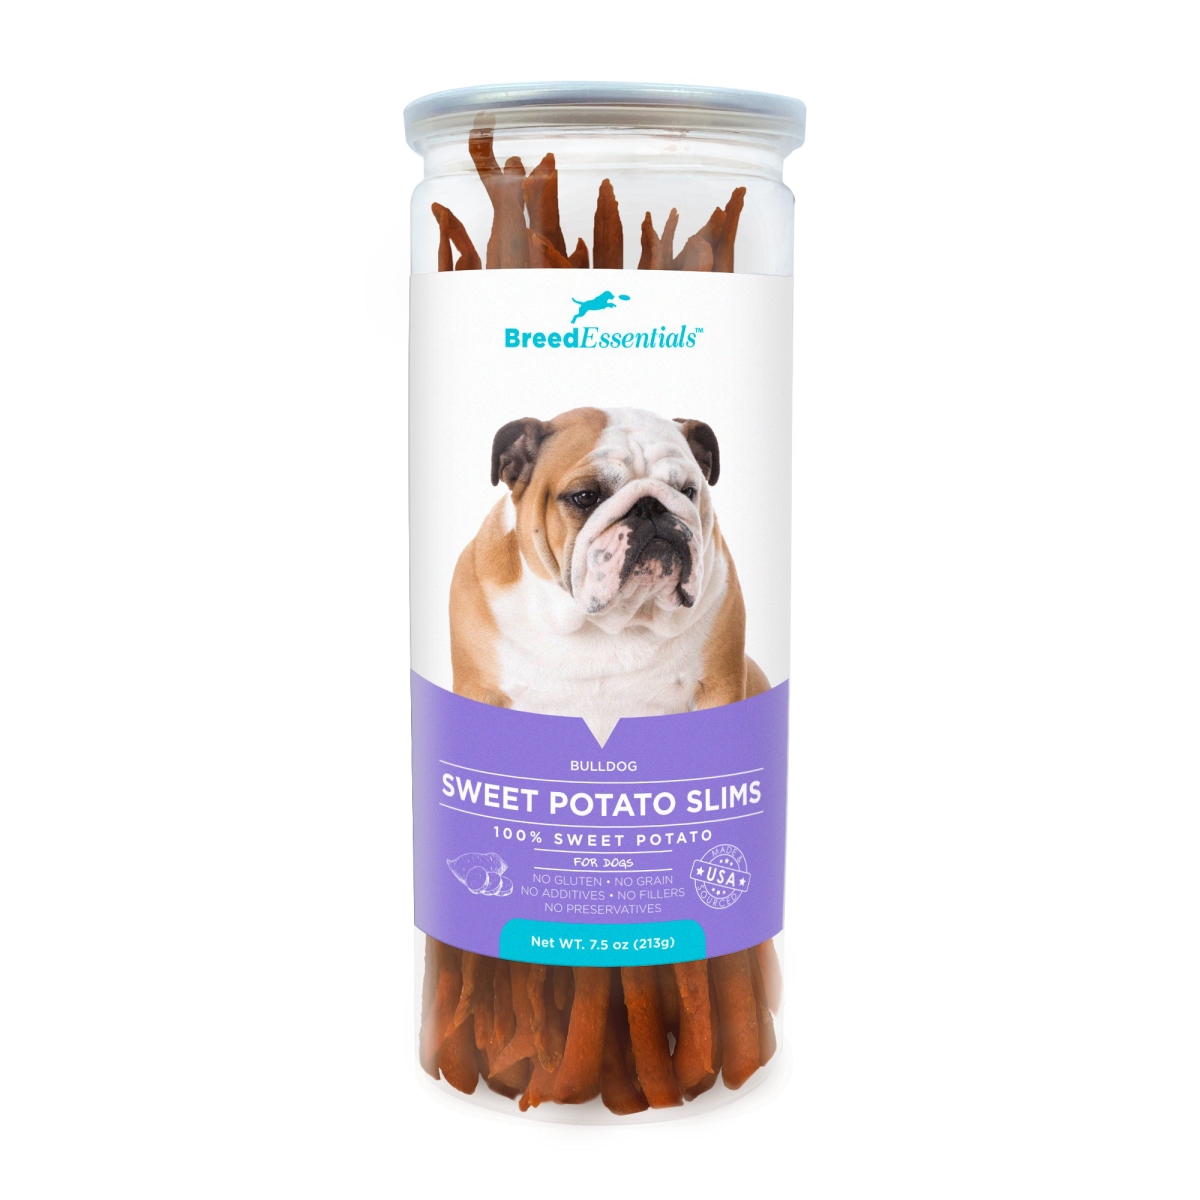 Picture of Breed Essentials 197247000259 7.5 oz Sweet Potato Slims - Bulldog